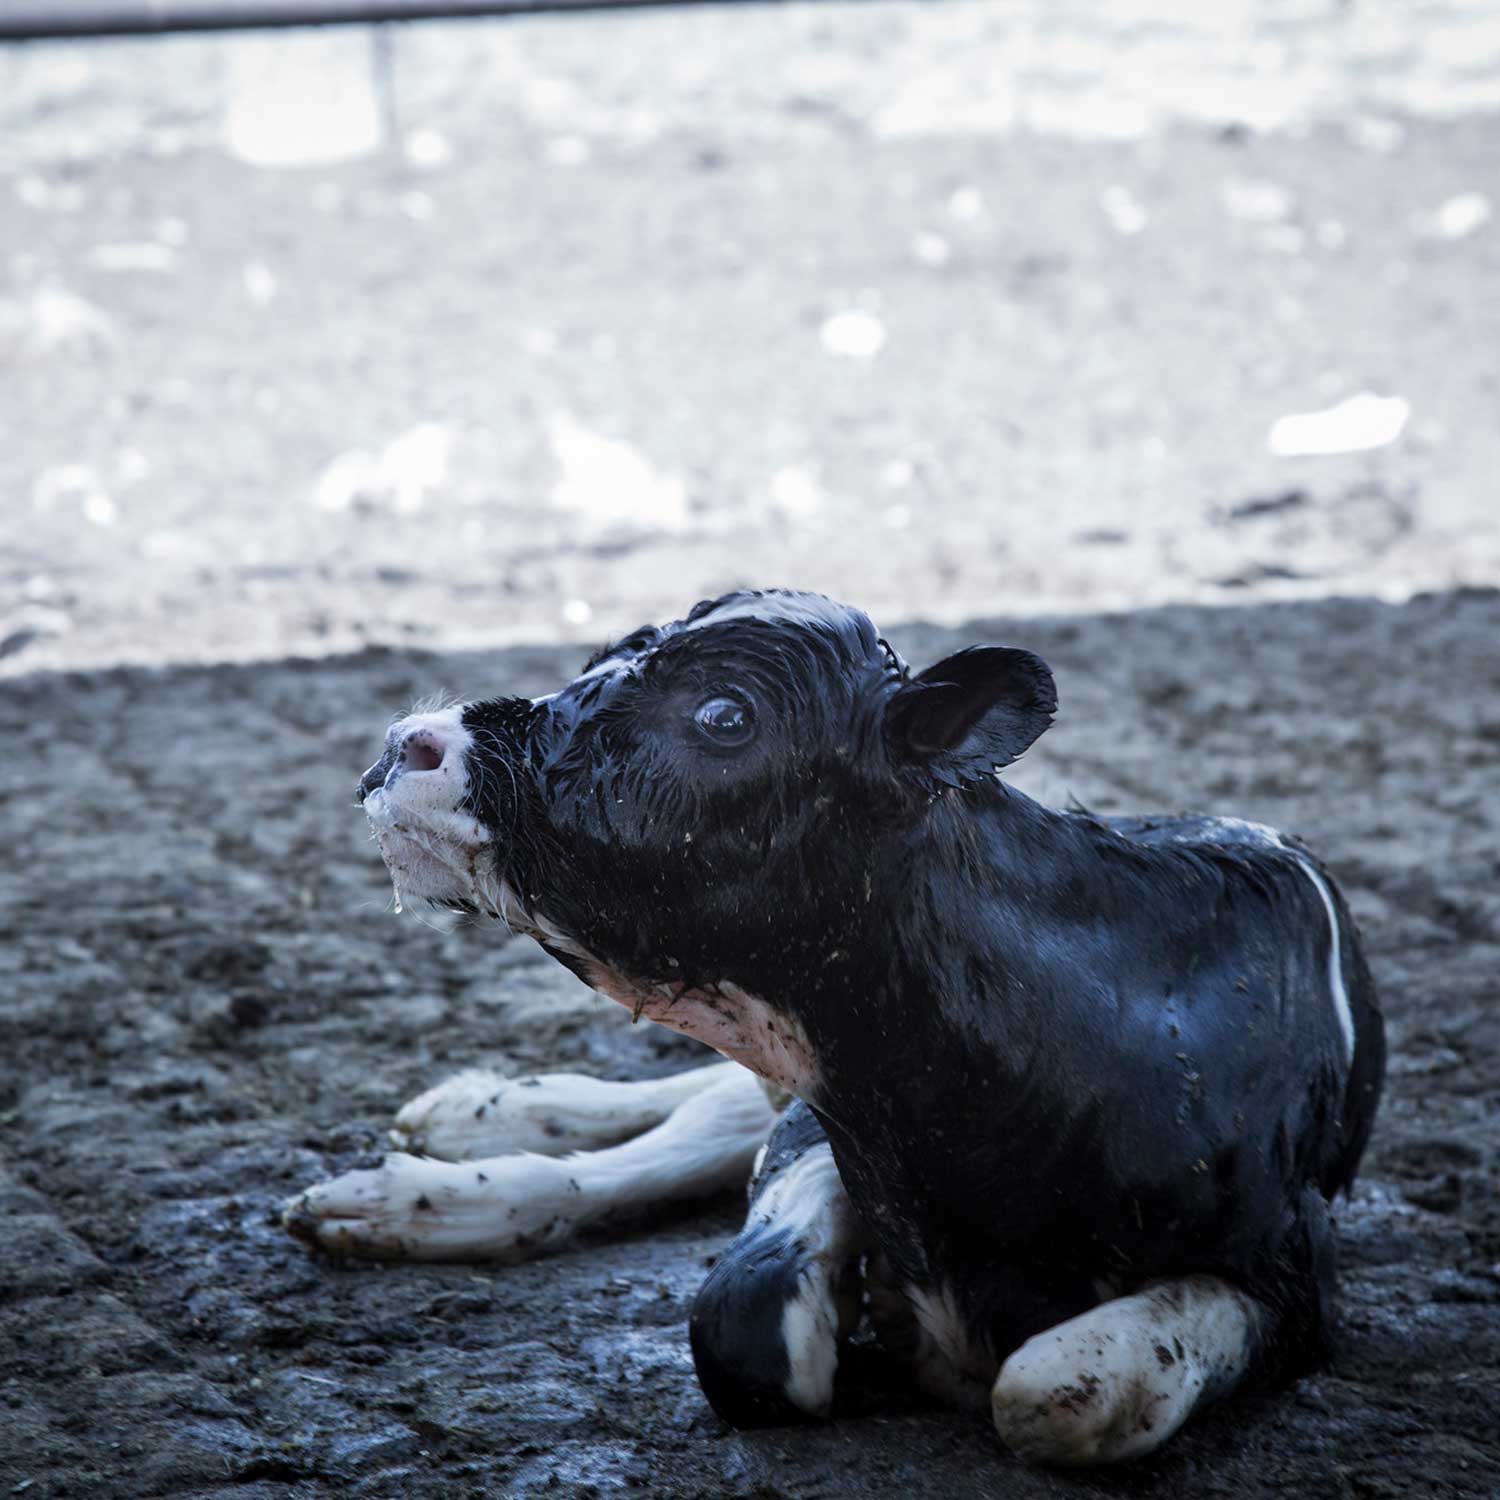 calf on ground just born